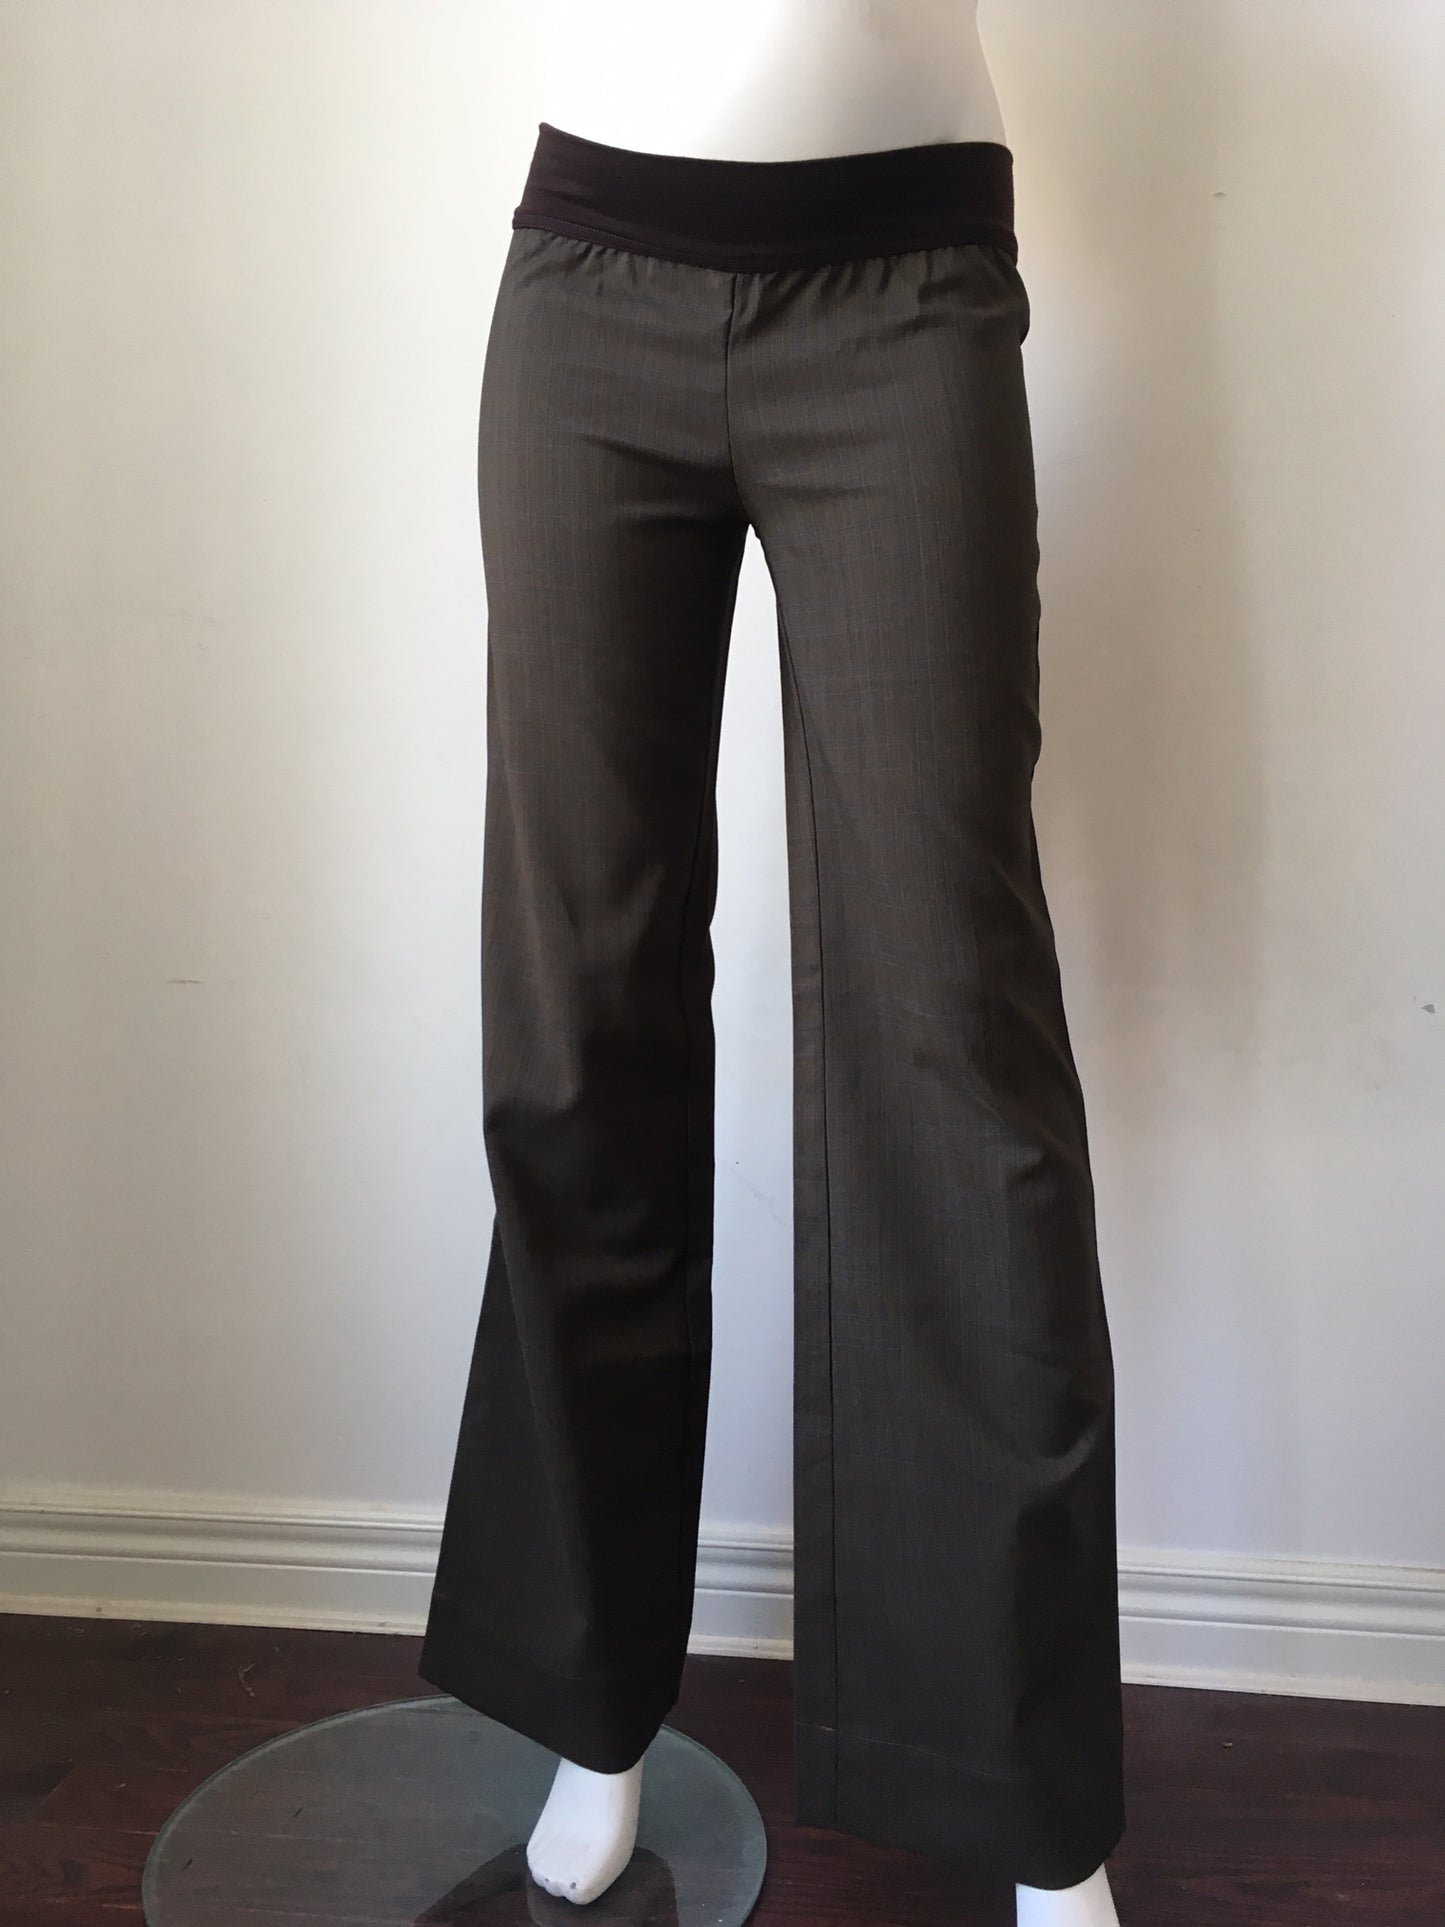 Everly Grey Trousers - Size XS, Sample Sale,- Luna Maternity & Nursing